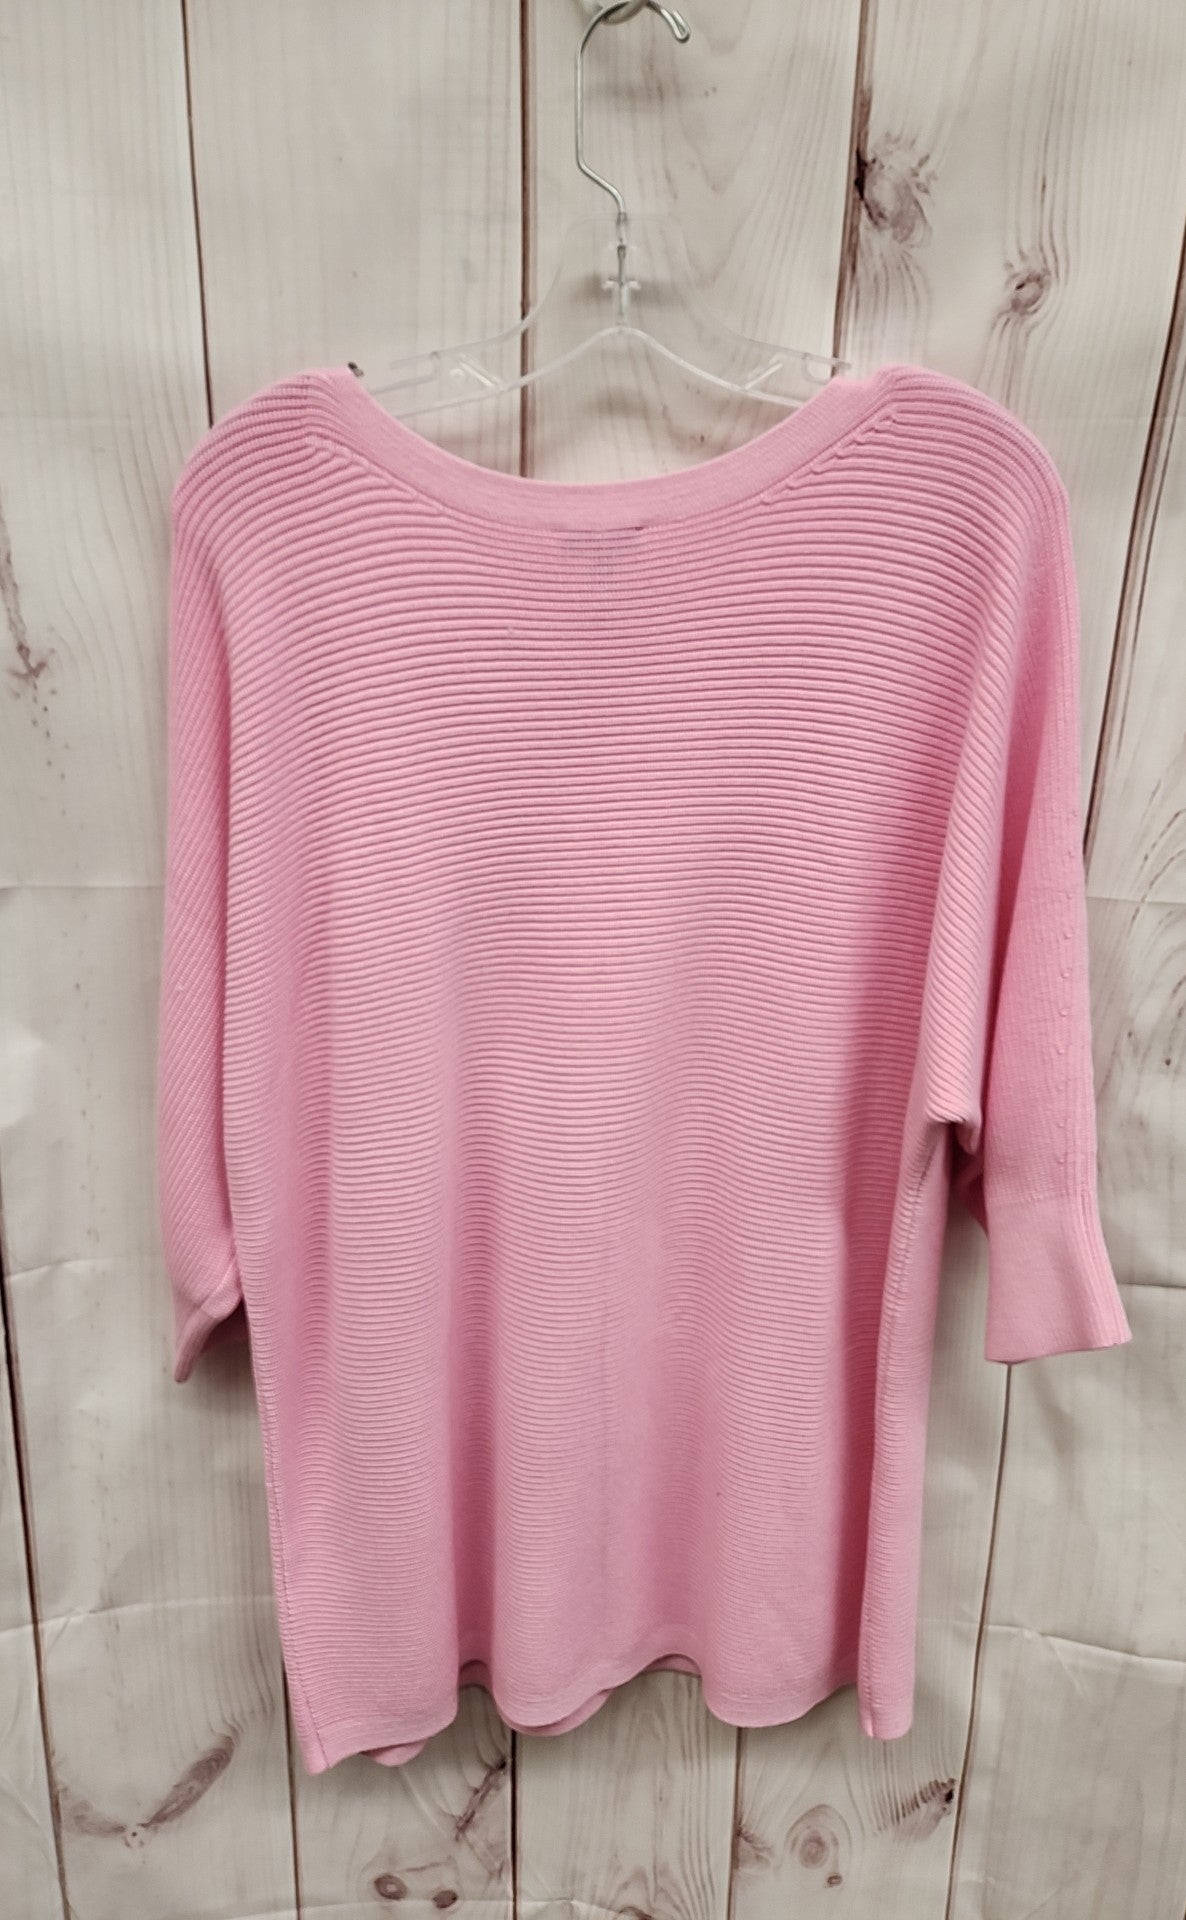 Talbots Women's Size 2X Pink Sweater